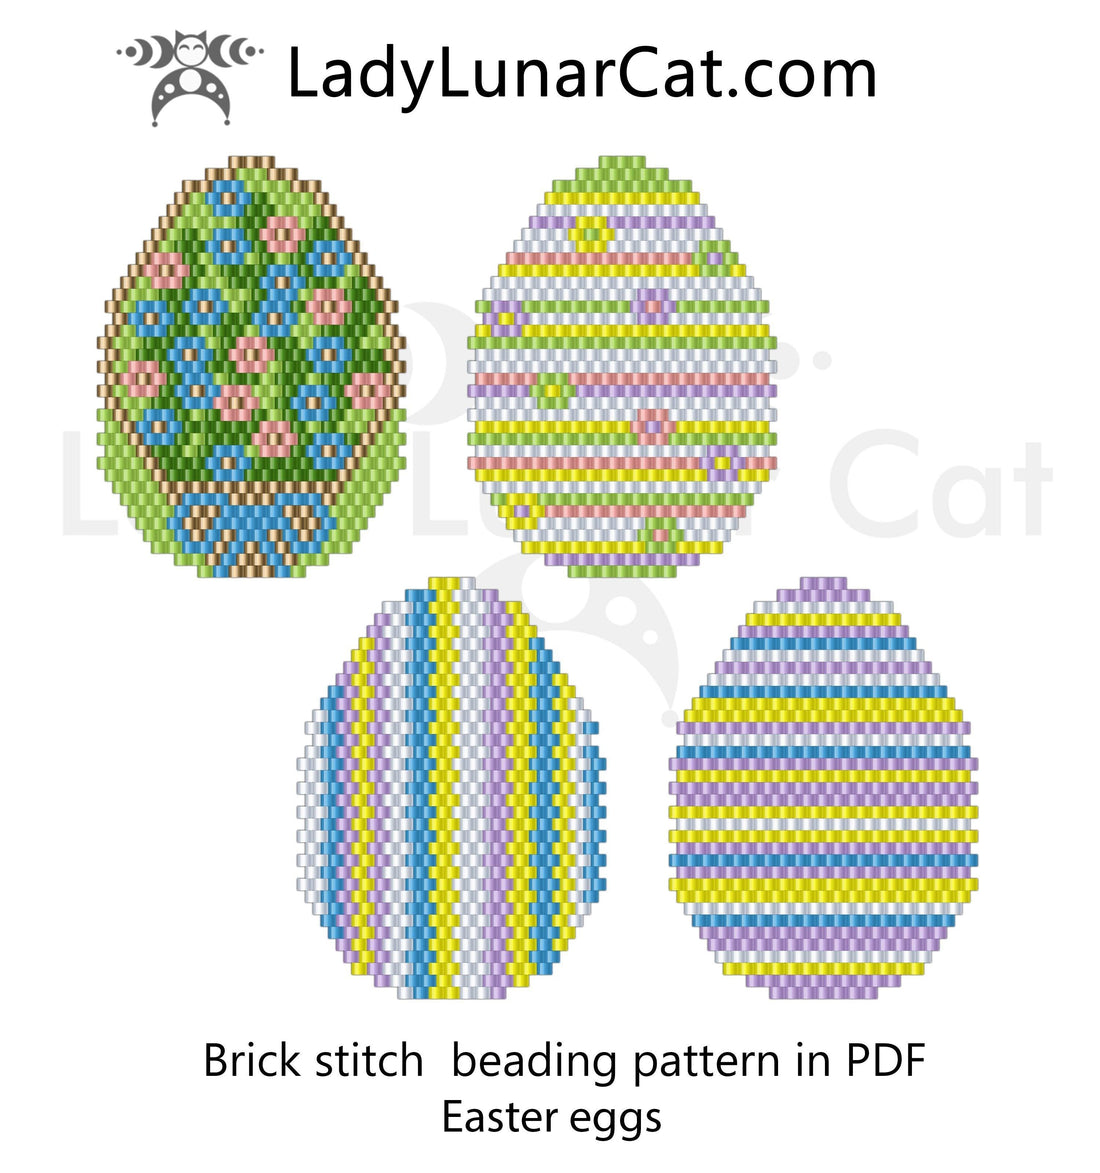 FREE Brick stitch beading pattern - Easter eggs. by Lady Lunar Cat LadyLunarCat